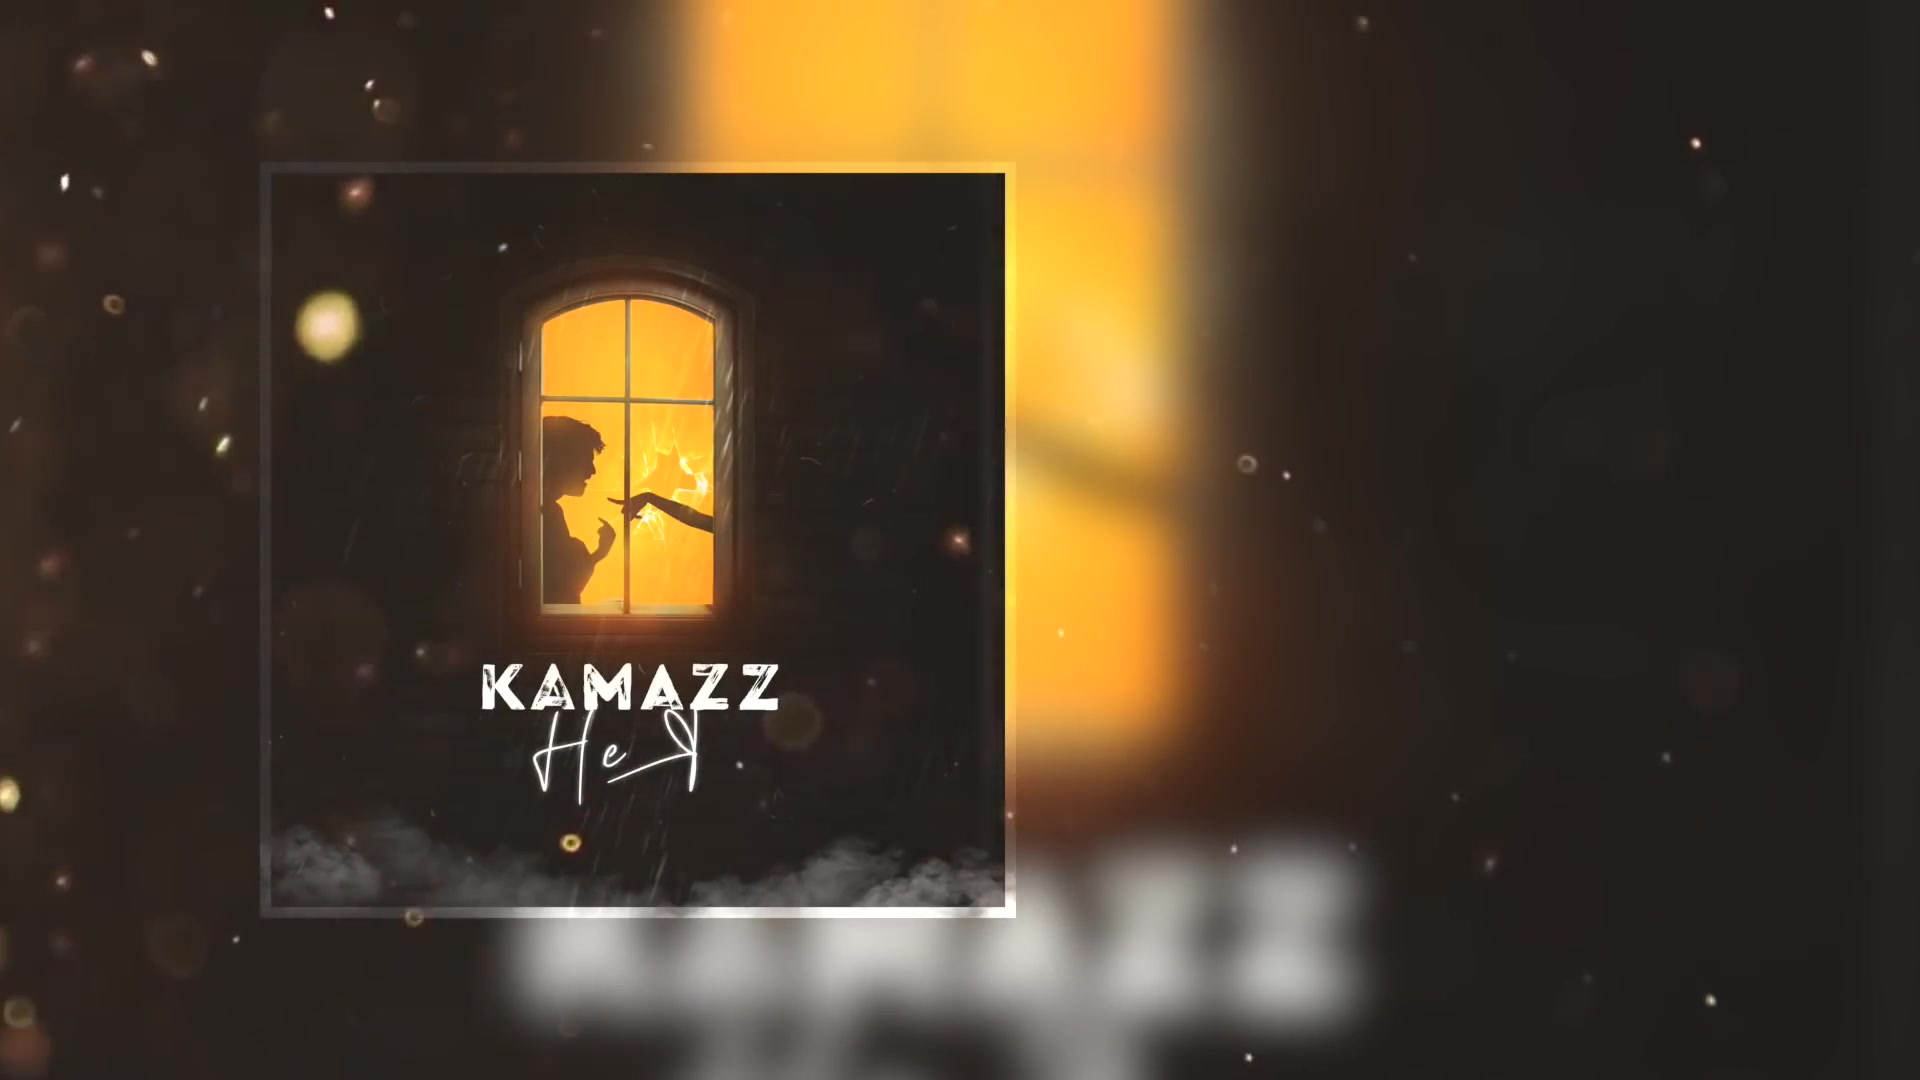 Ну как ты там живешь песня камаз. Kamazz логотип. Kamazz как ты там. Kamazz надпись. Как ты там песня КАМАЗ.